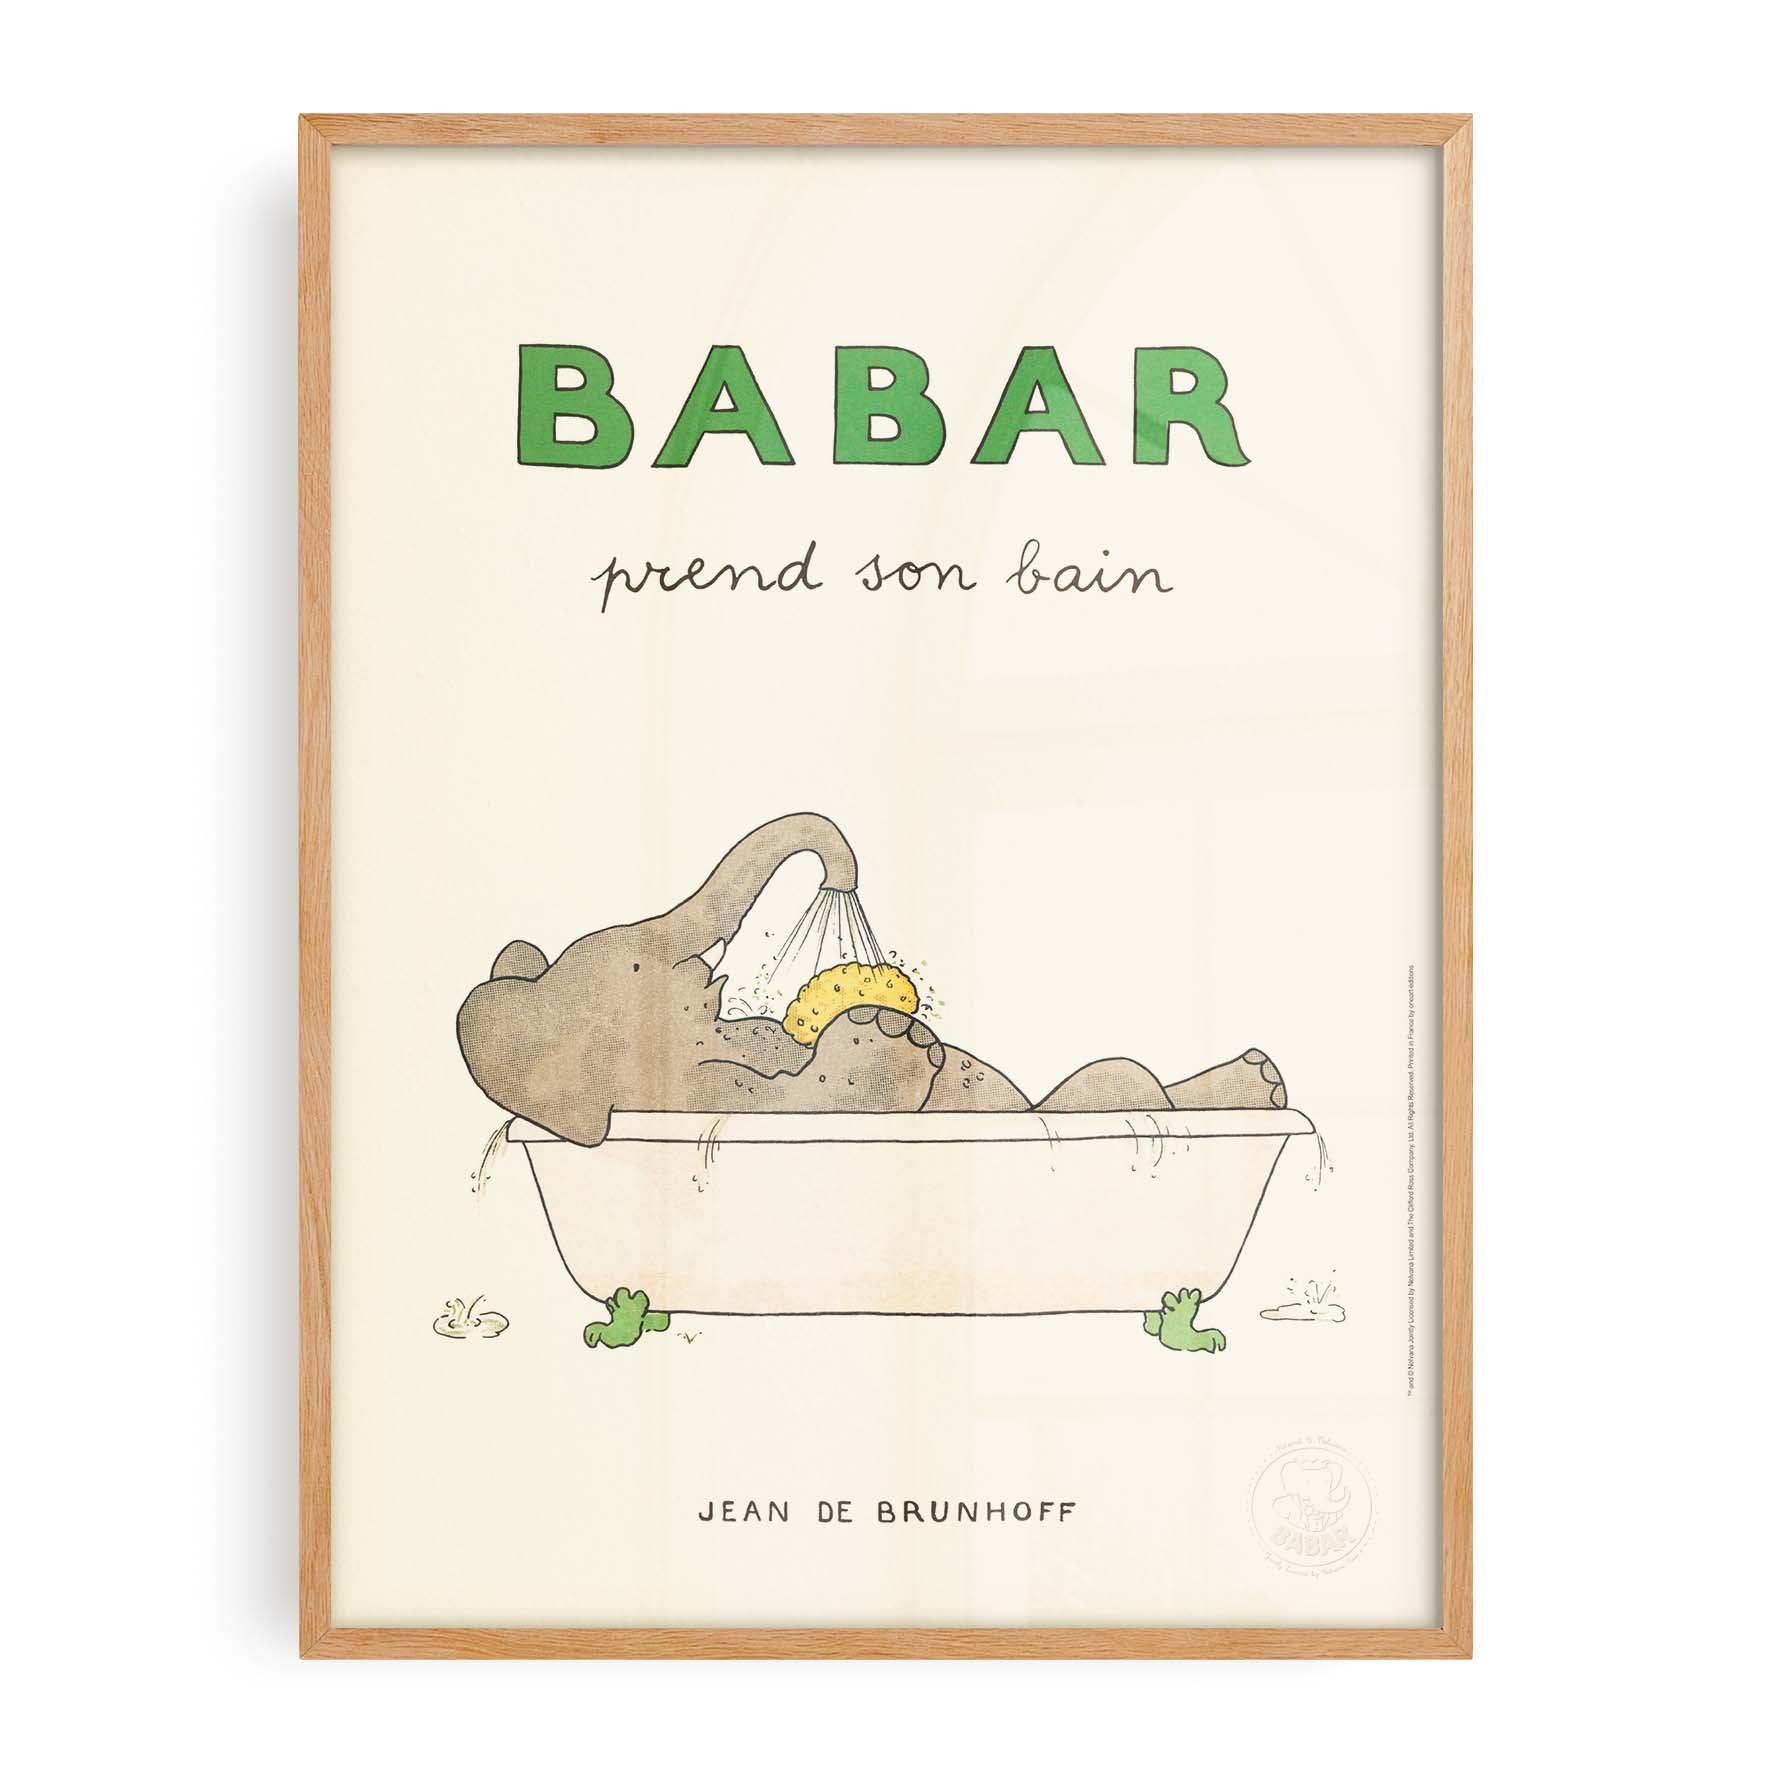 Affiche Babar prend son bain-oneart.fr